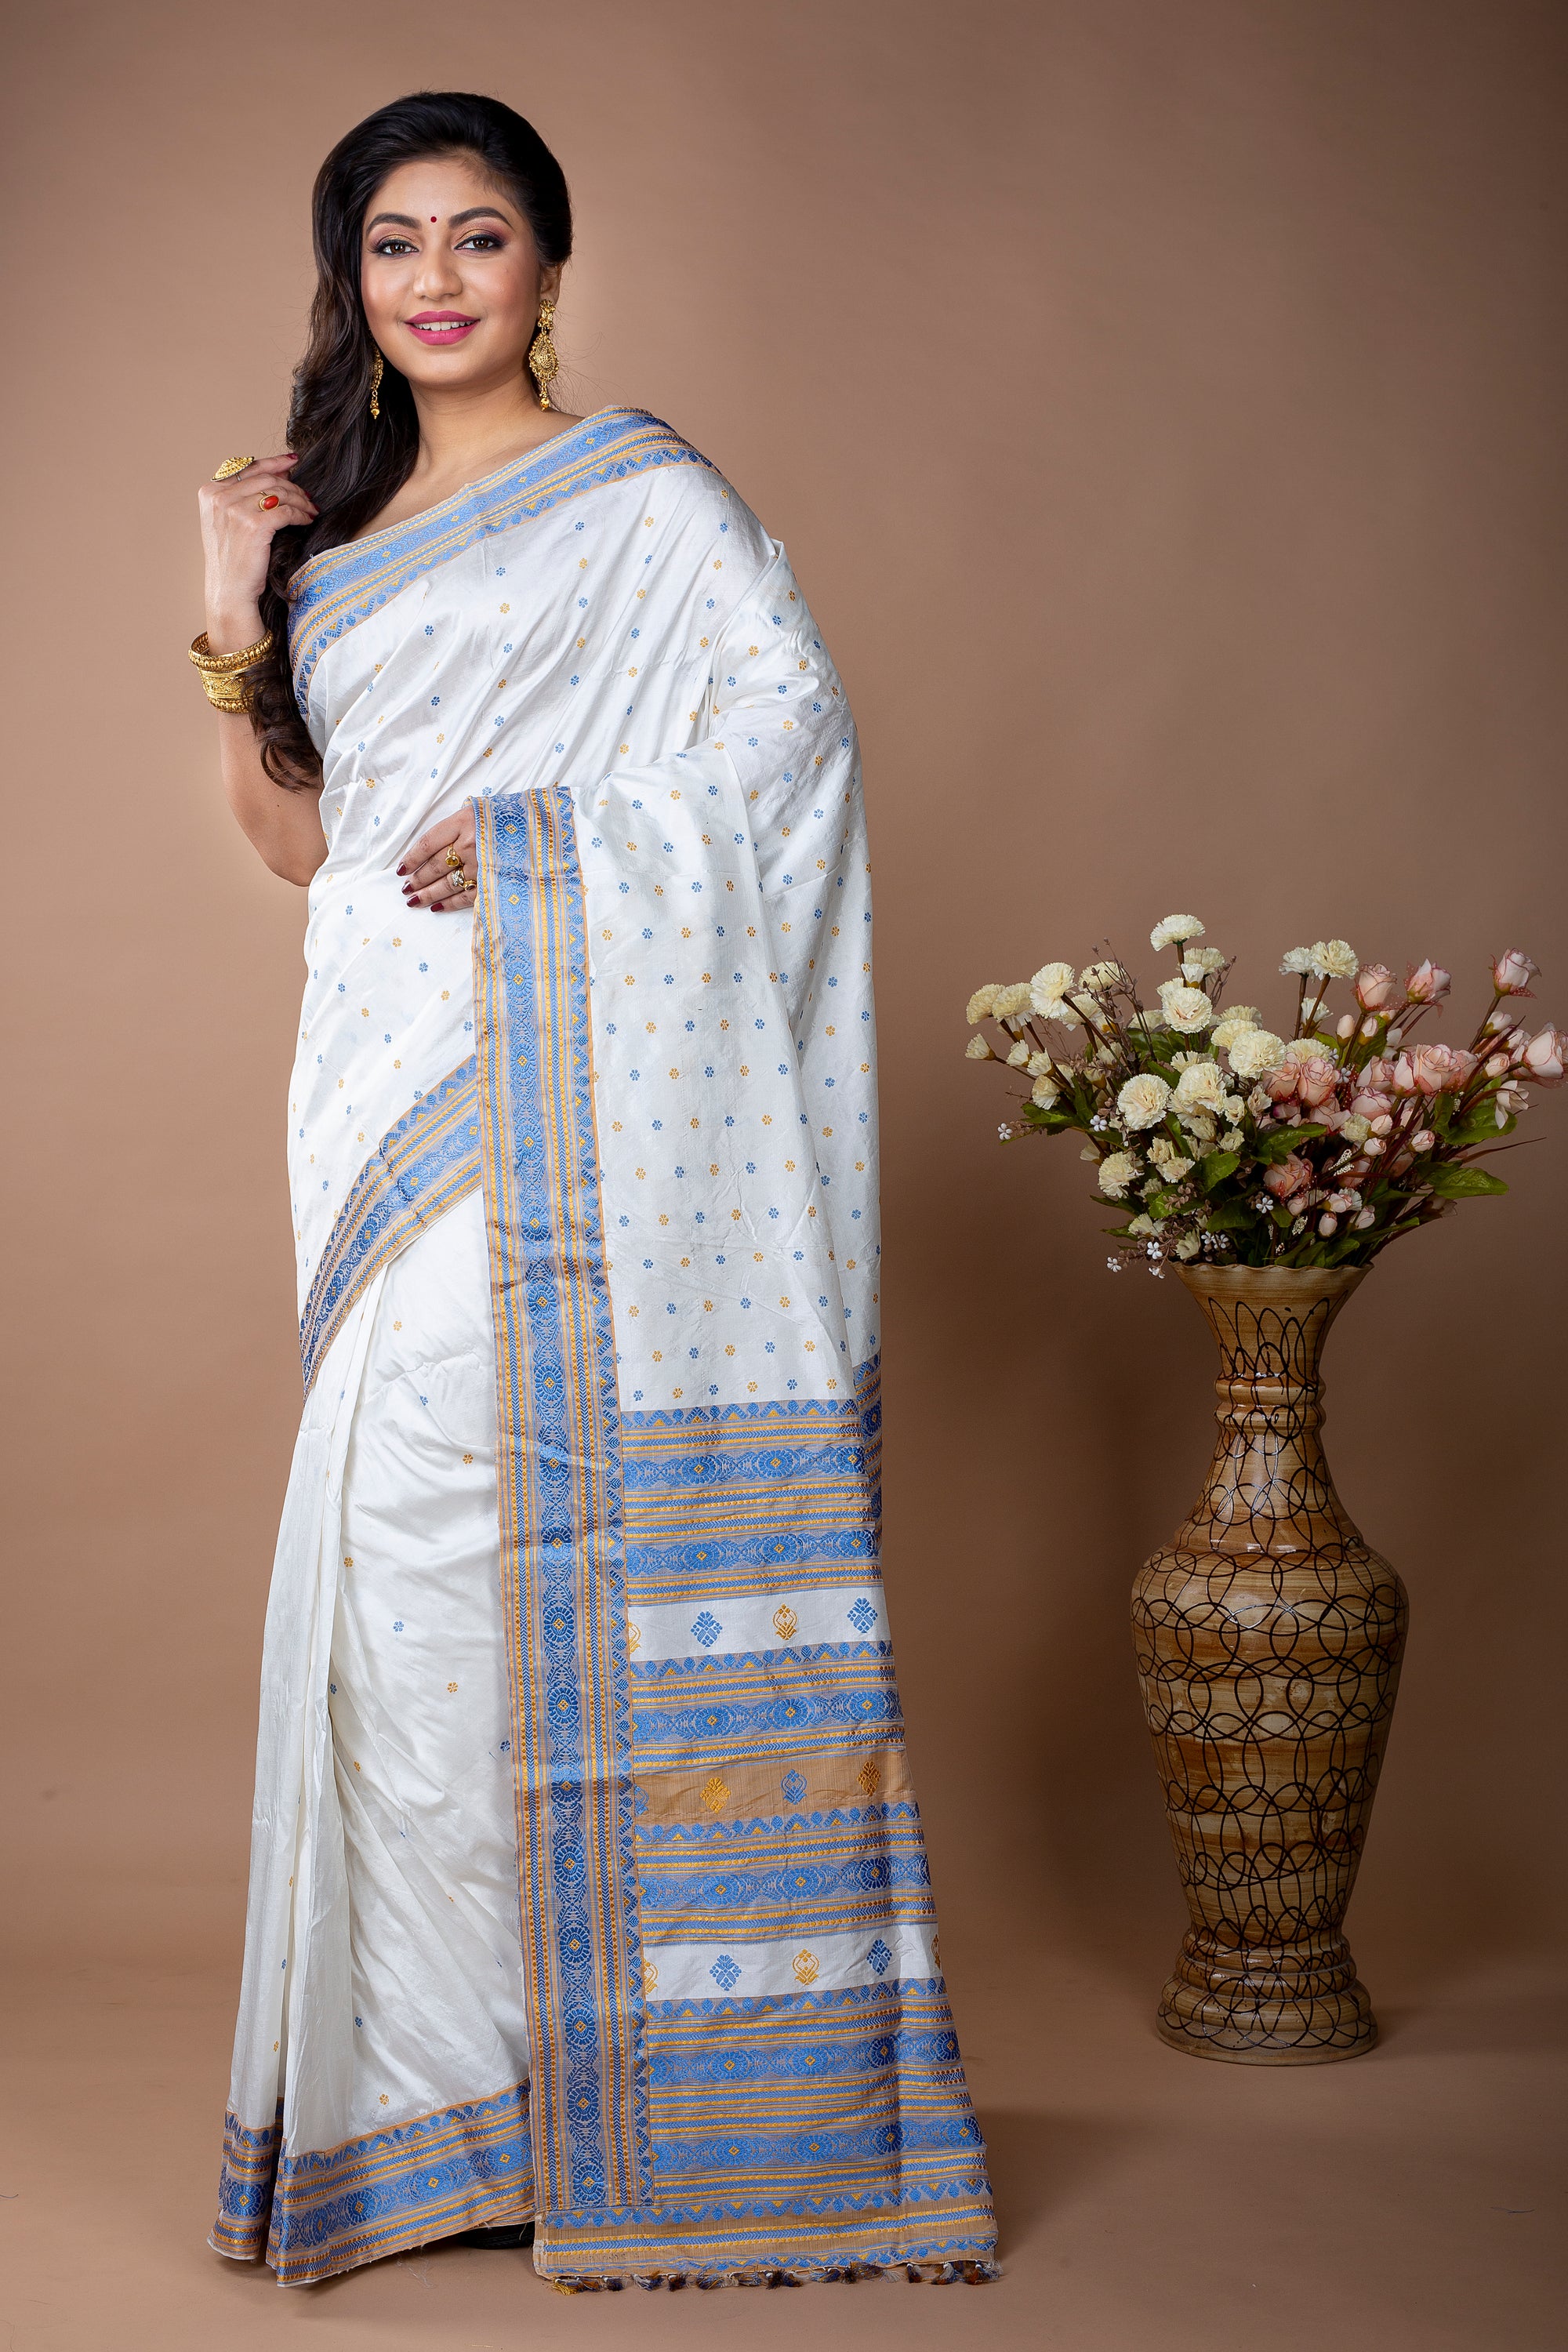 Assam Silk Sarees - These 15 Traditional Designs for Stunning Look | Assam  silk saree, Saree designs, Silk sarees